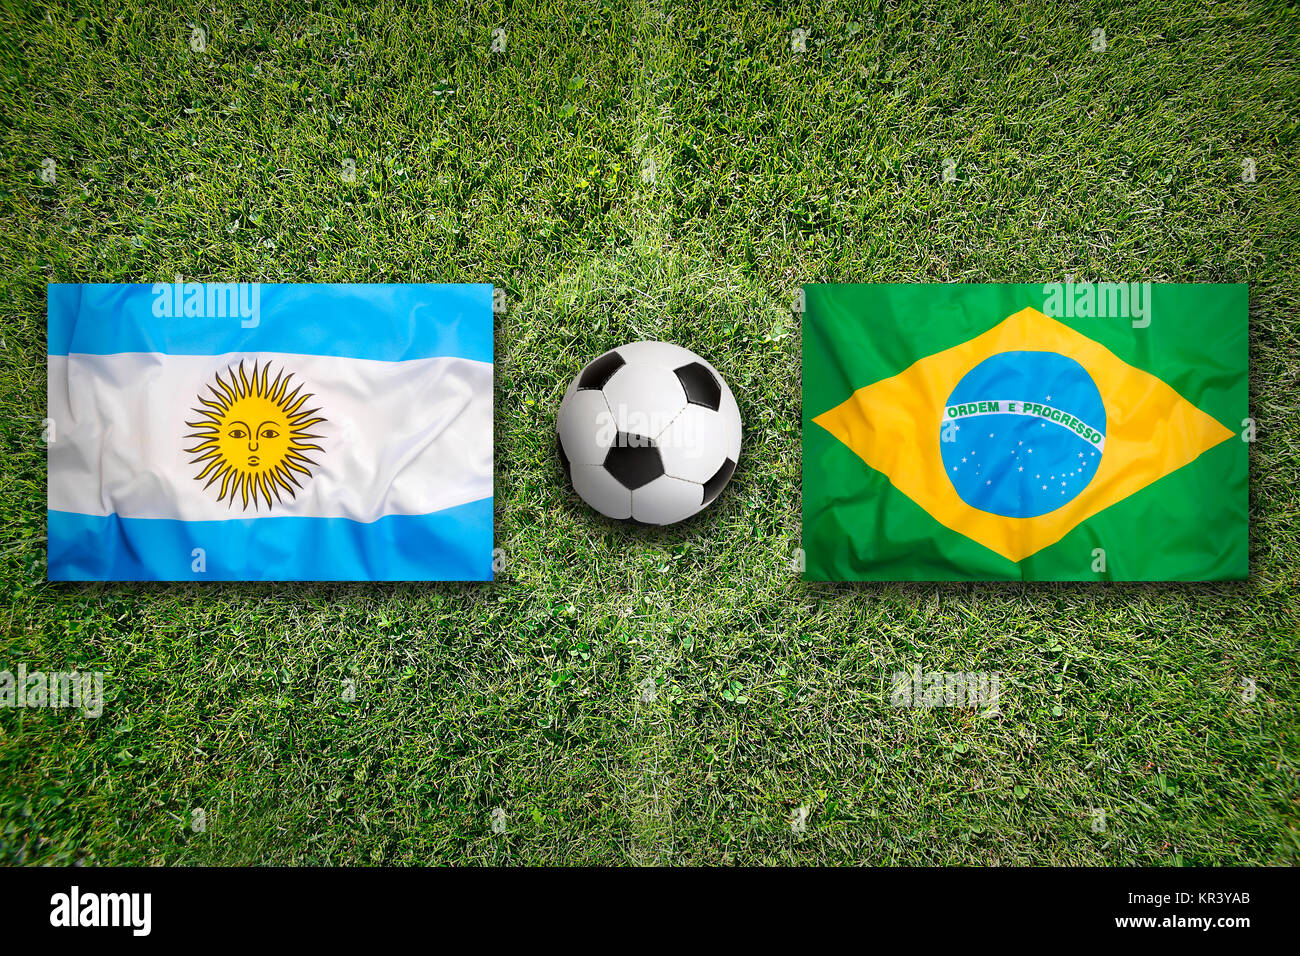 Argentina Vs Brazil Flags On Soccer Field Stock Photo Alamy